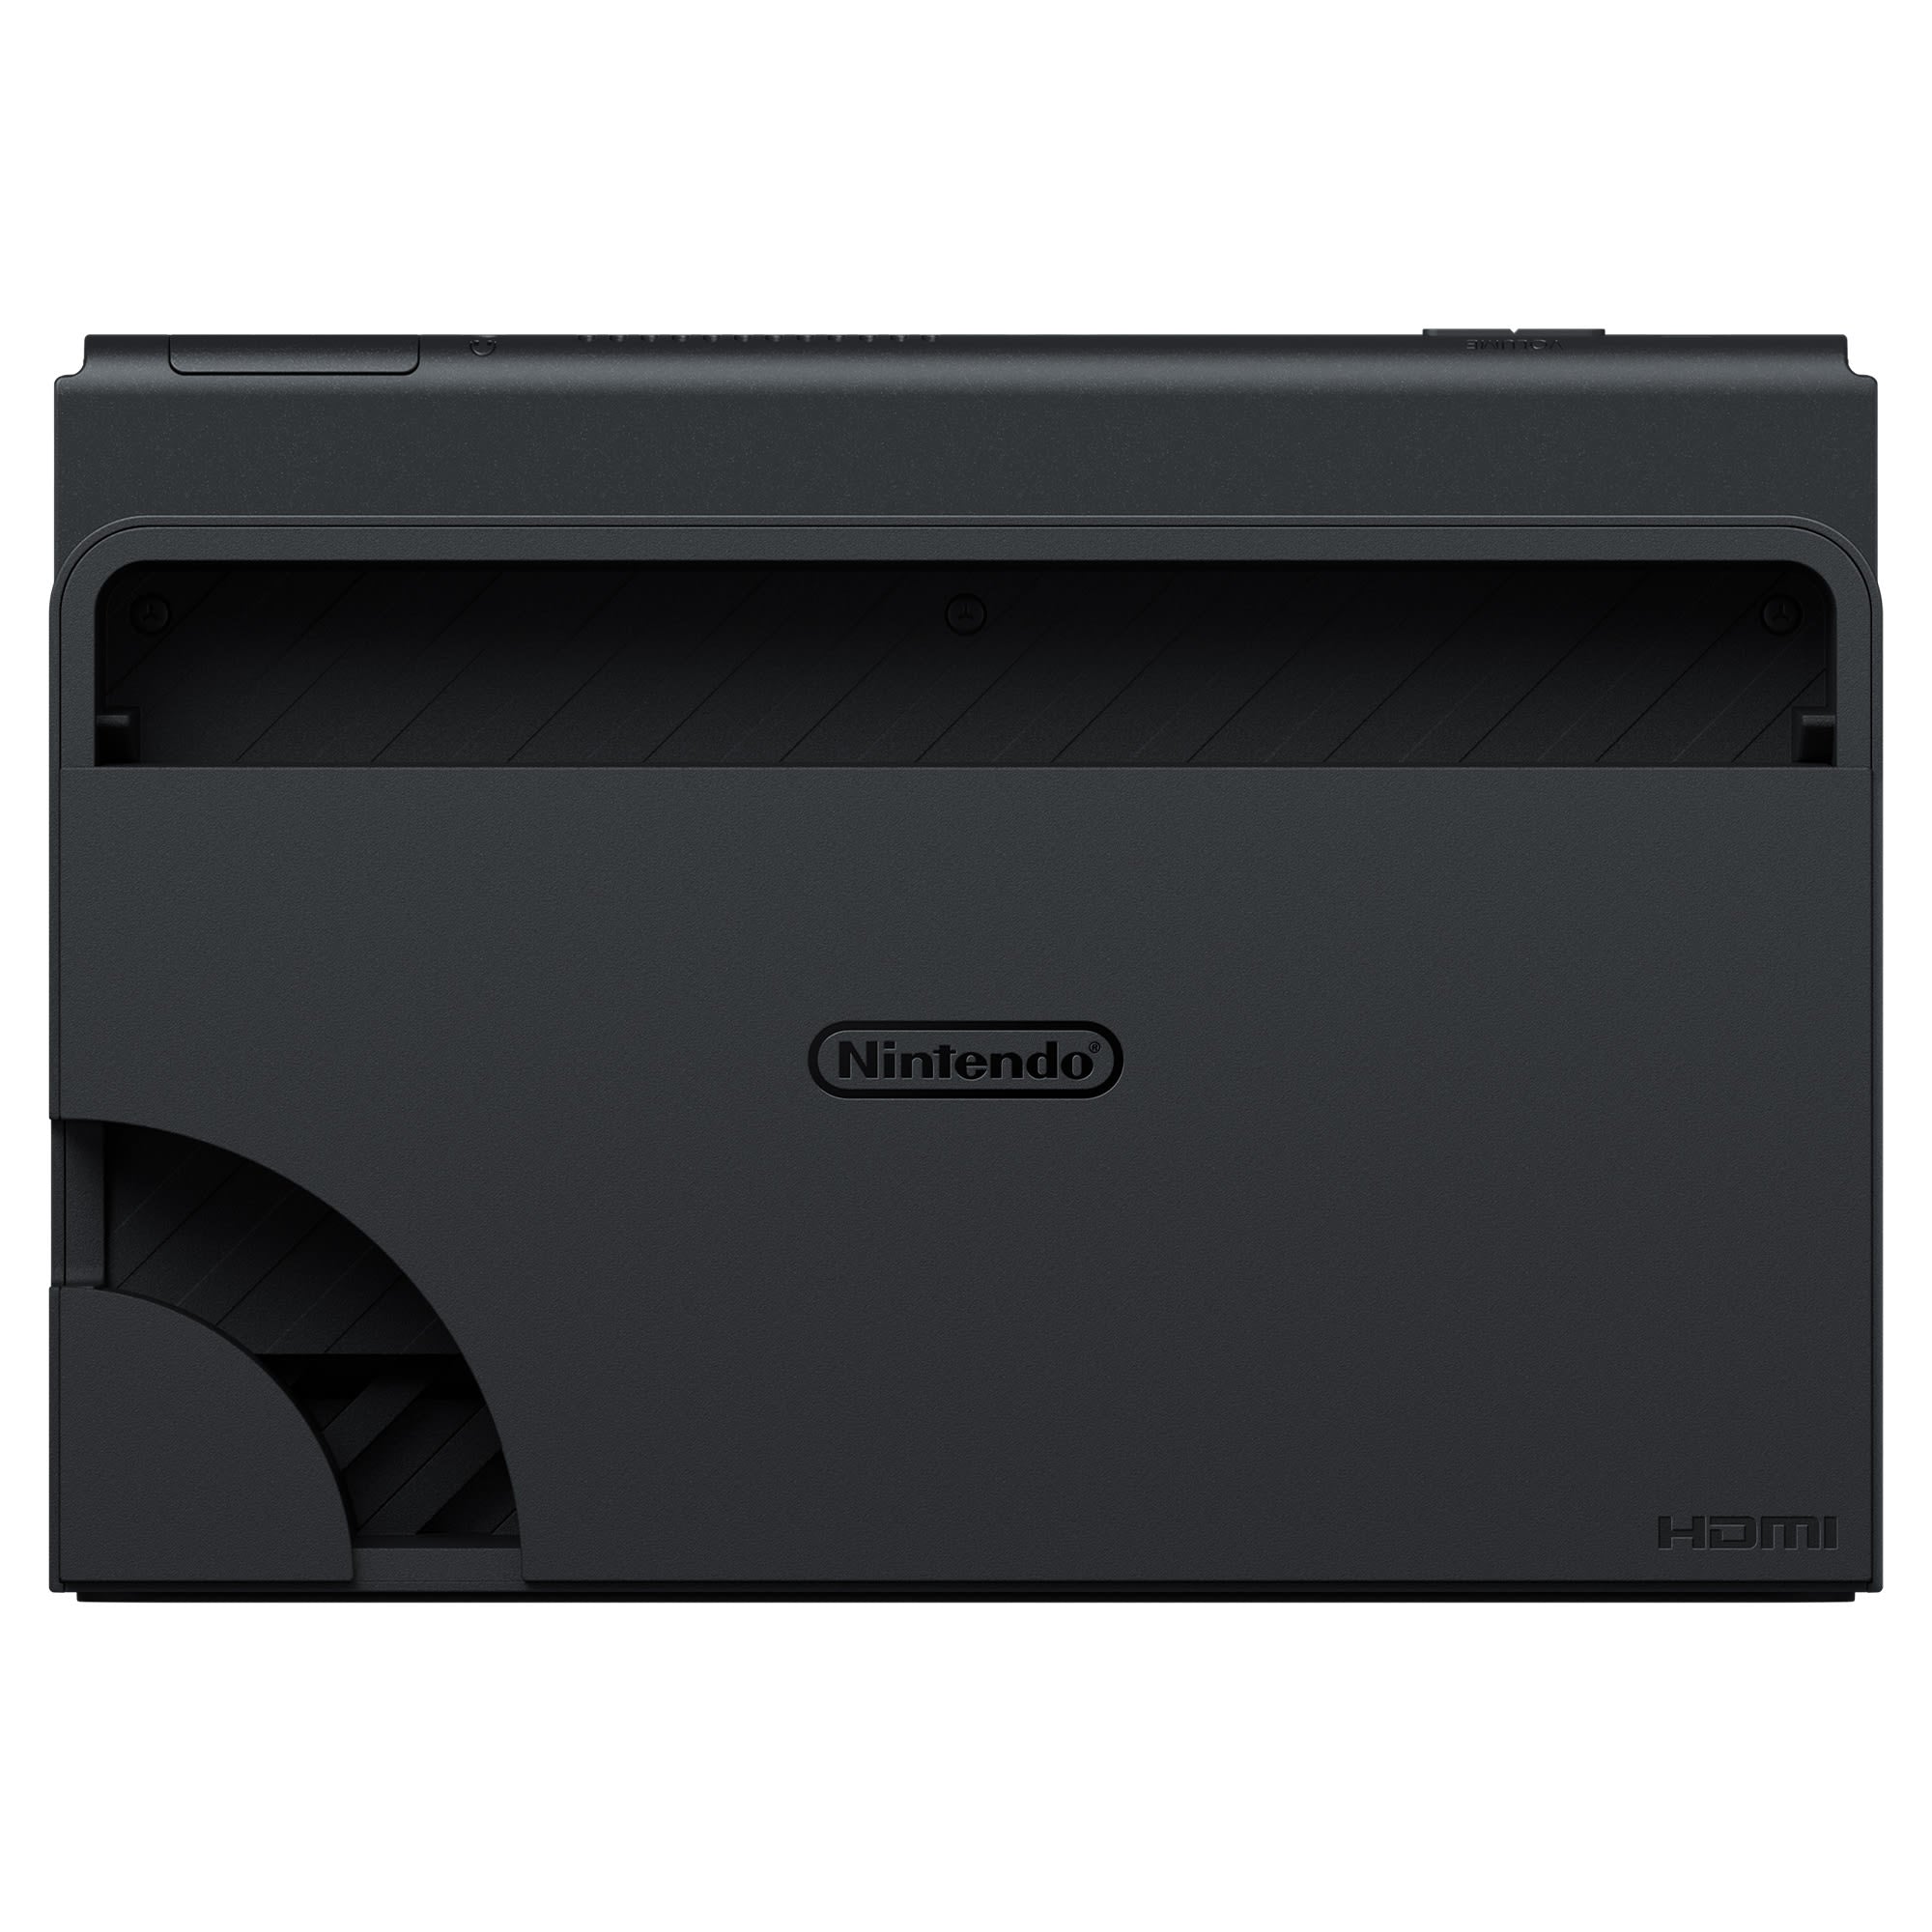 Nintendo Switch OLED Model 64GB, Blue / Red - Refurbished Excellent